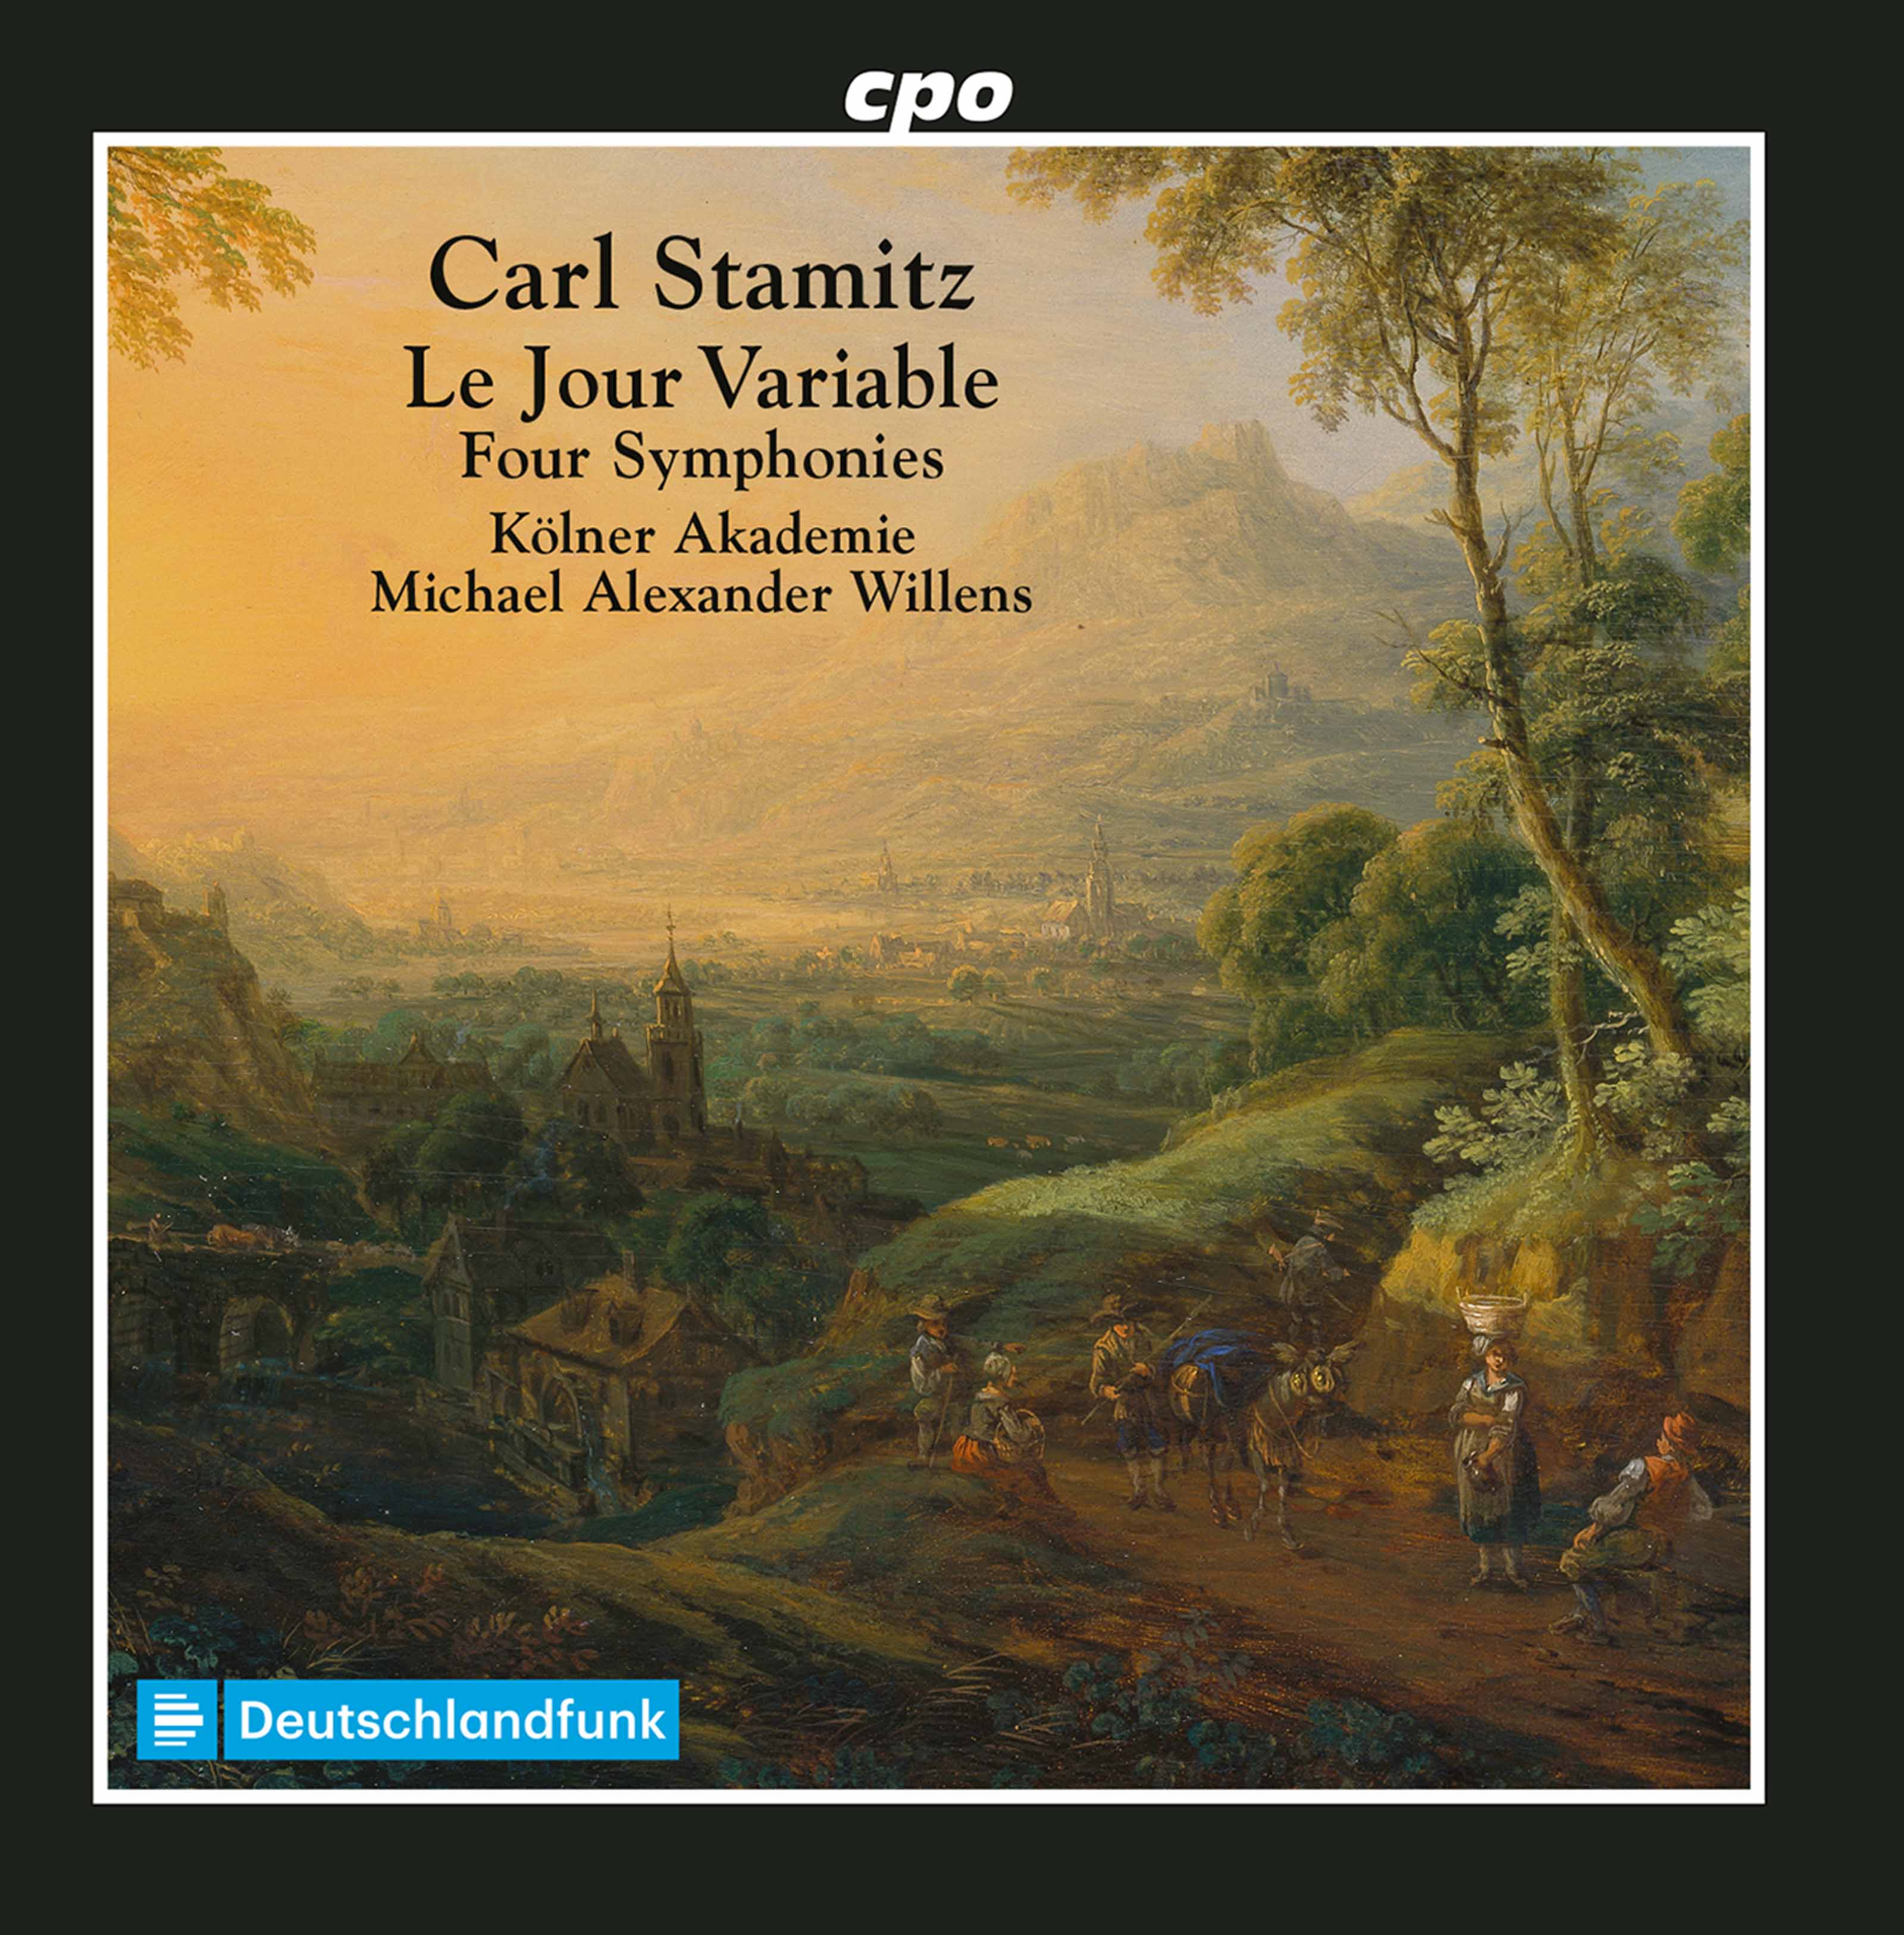 Le Jour Variable: Symphonies of Carl Stamitz